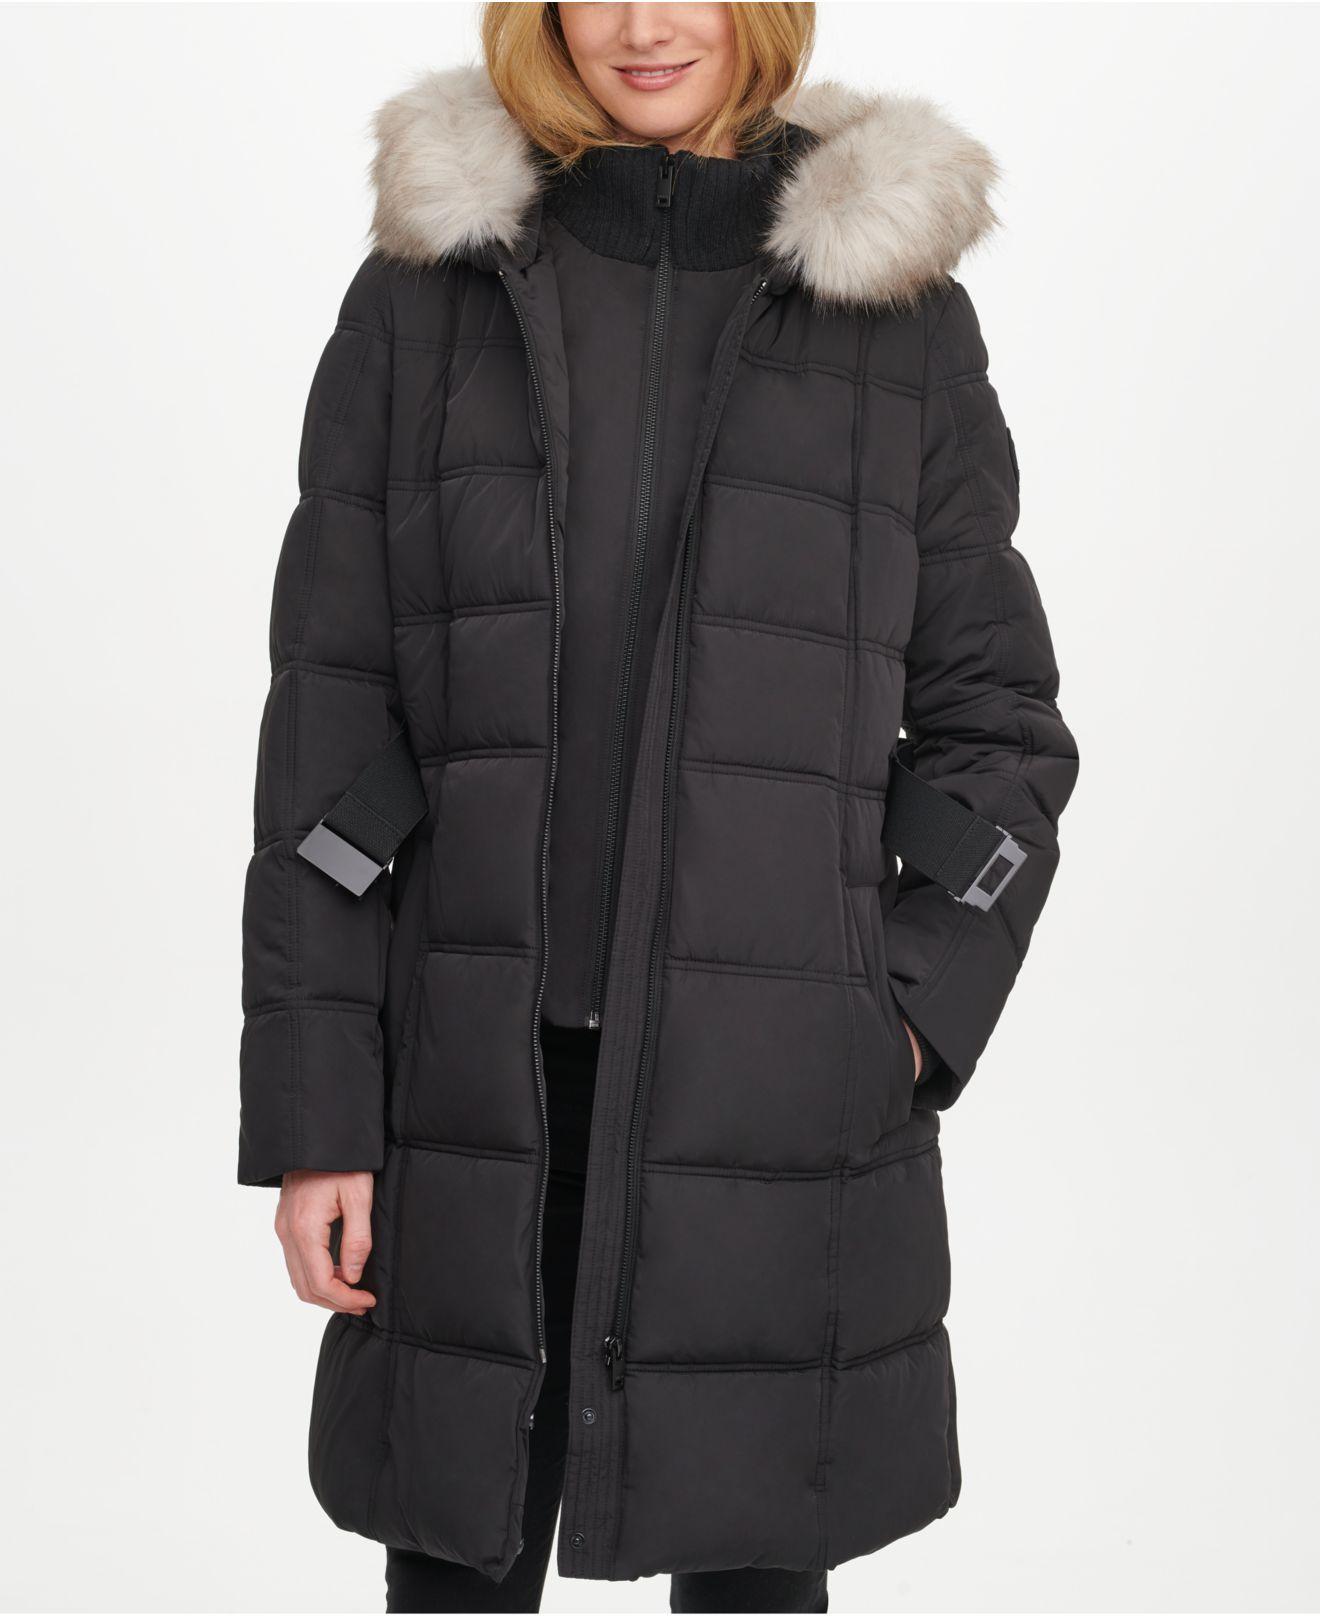 DKNY Belted Faux-fur-trim Hooded Puffer Coat in Black - Lyst